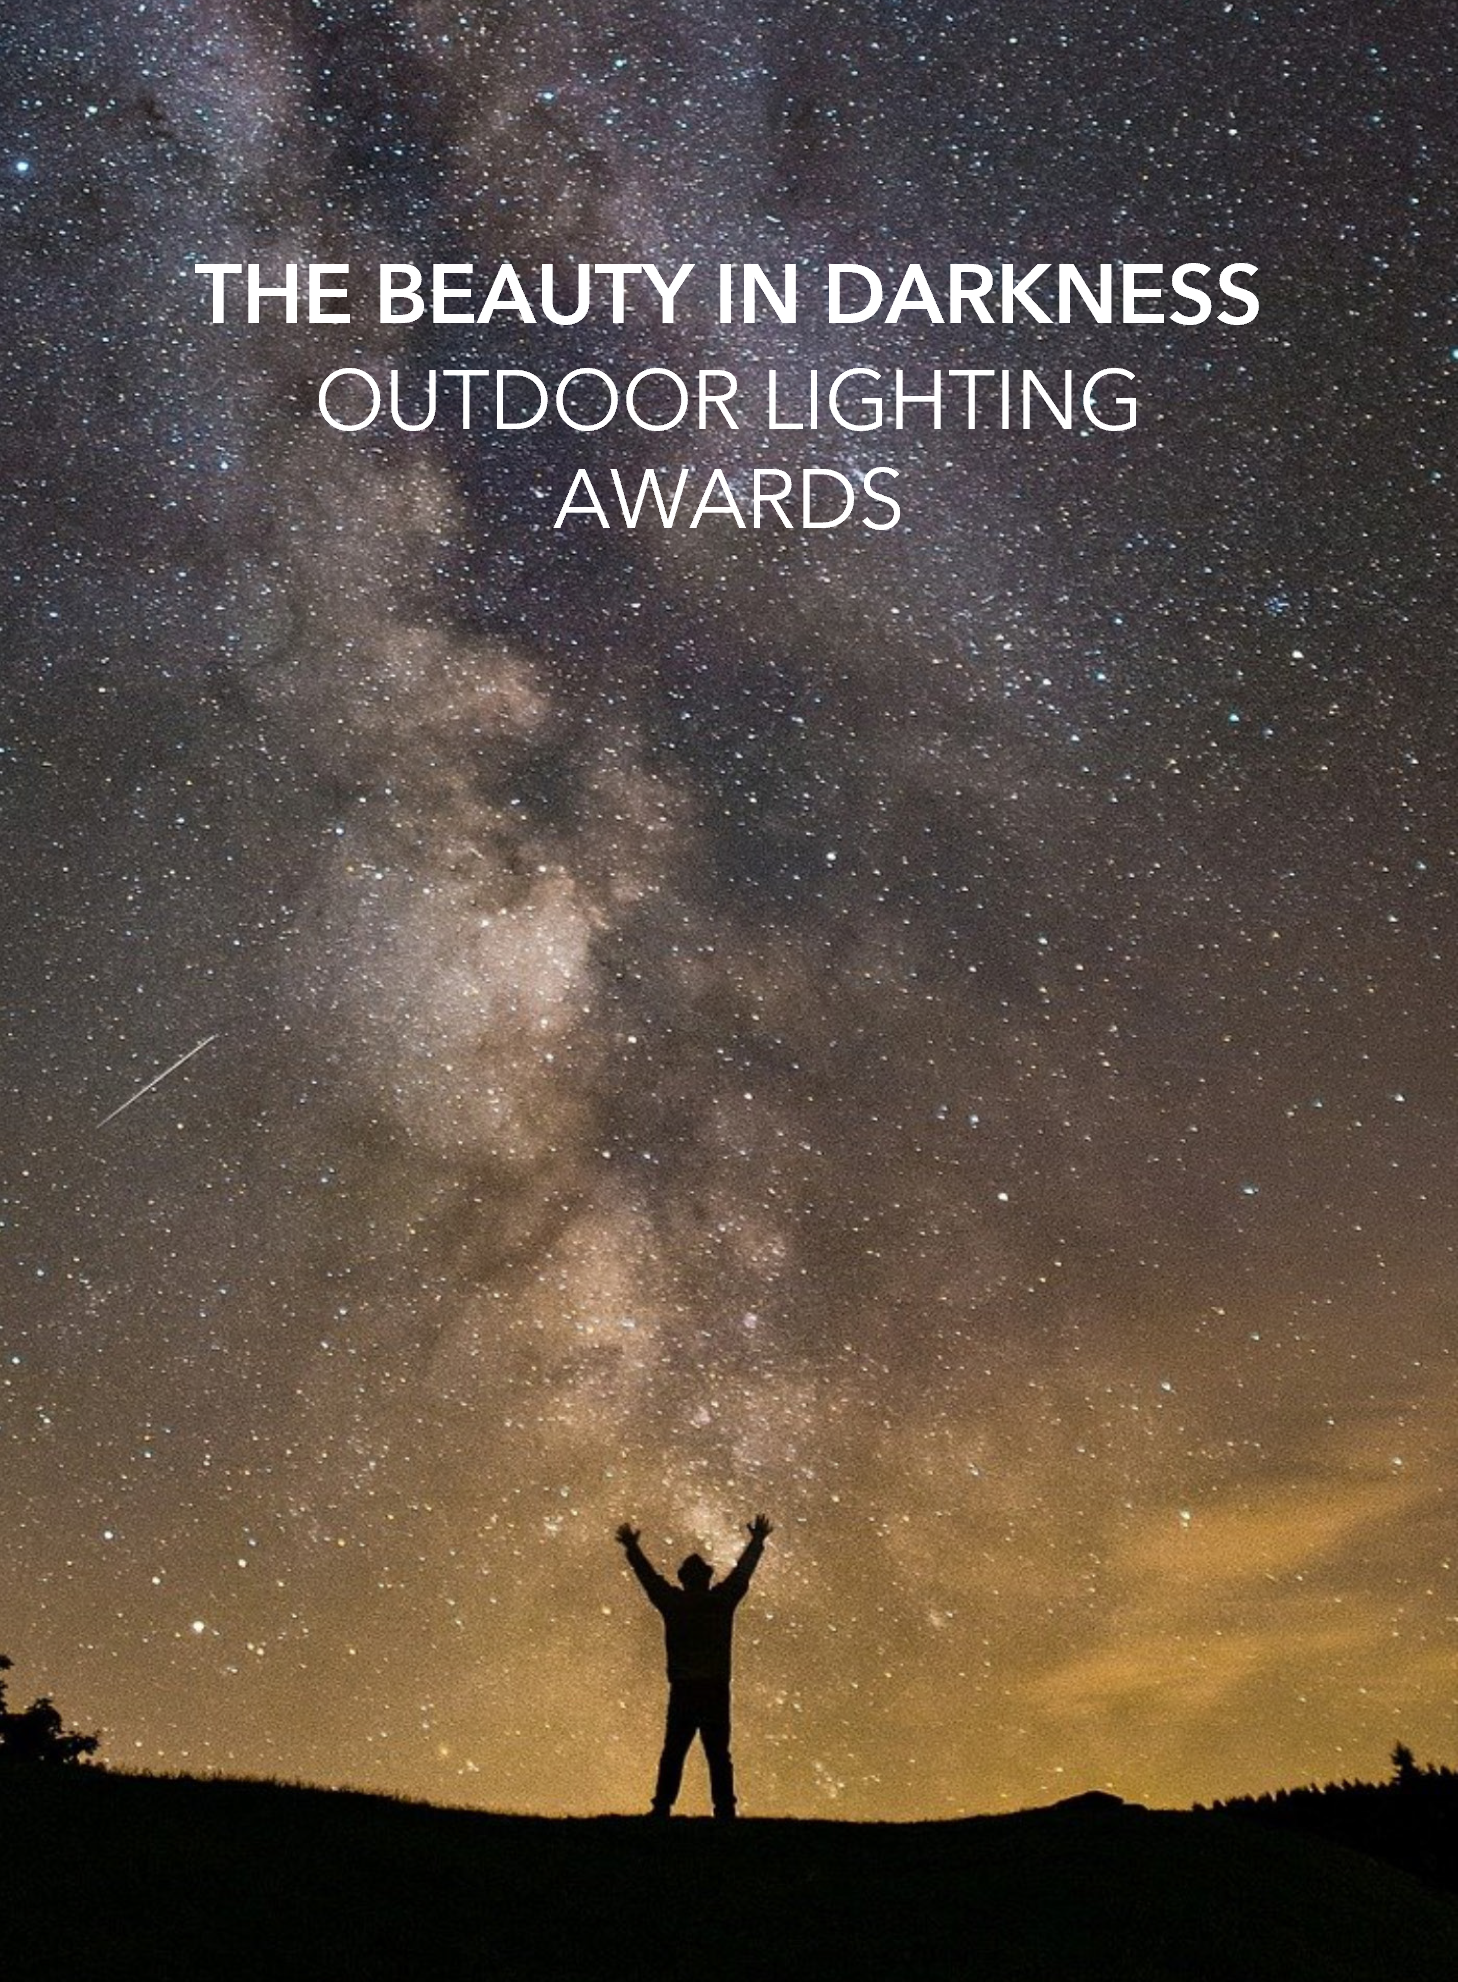 Beauty in darkness awards